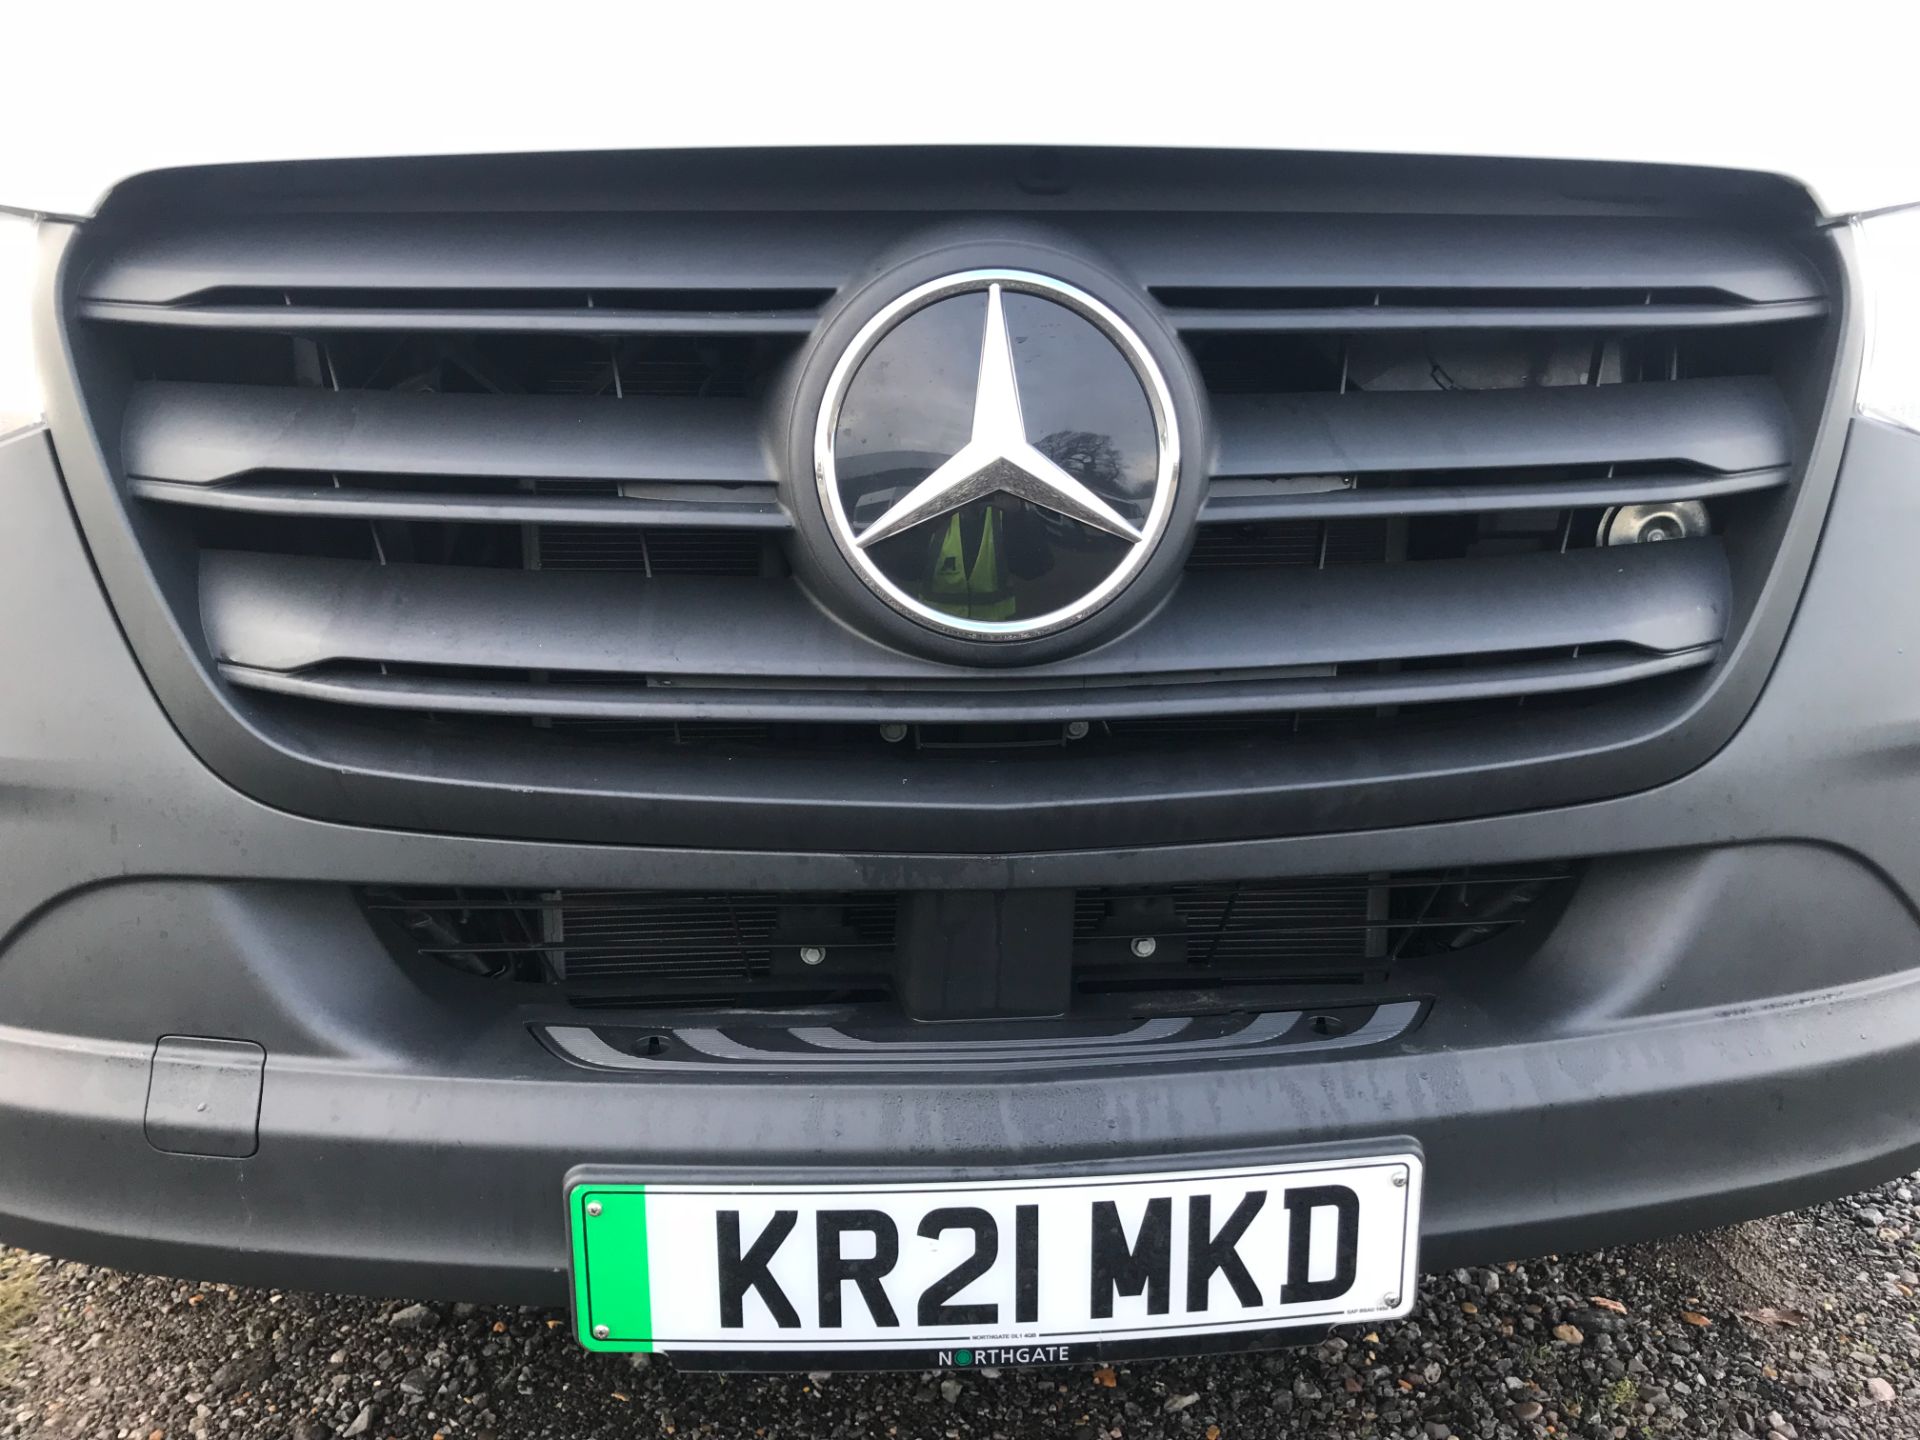 2021 Mercedes-Benz Sprinter 85Kw 55Kwh Progressive Van Auto [80Kw Charger] (KR21MKD) Thumbnail 38